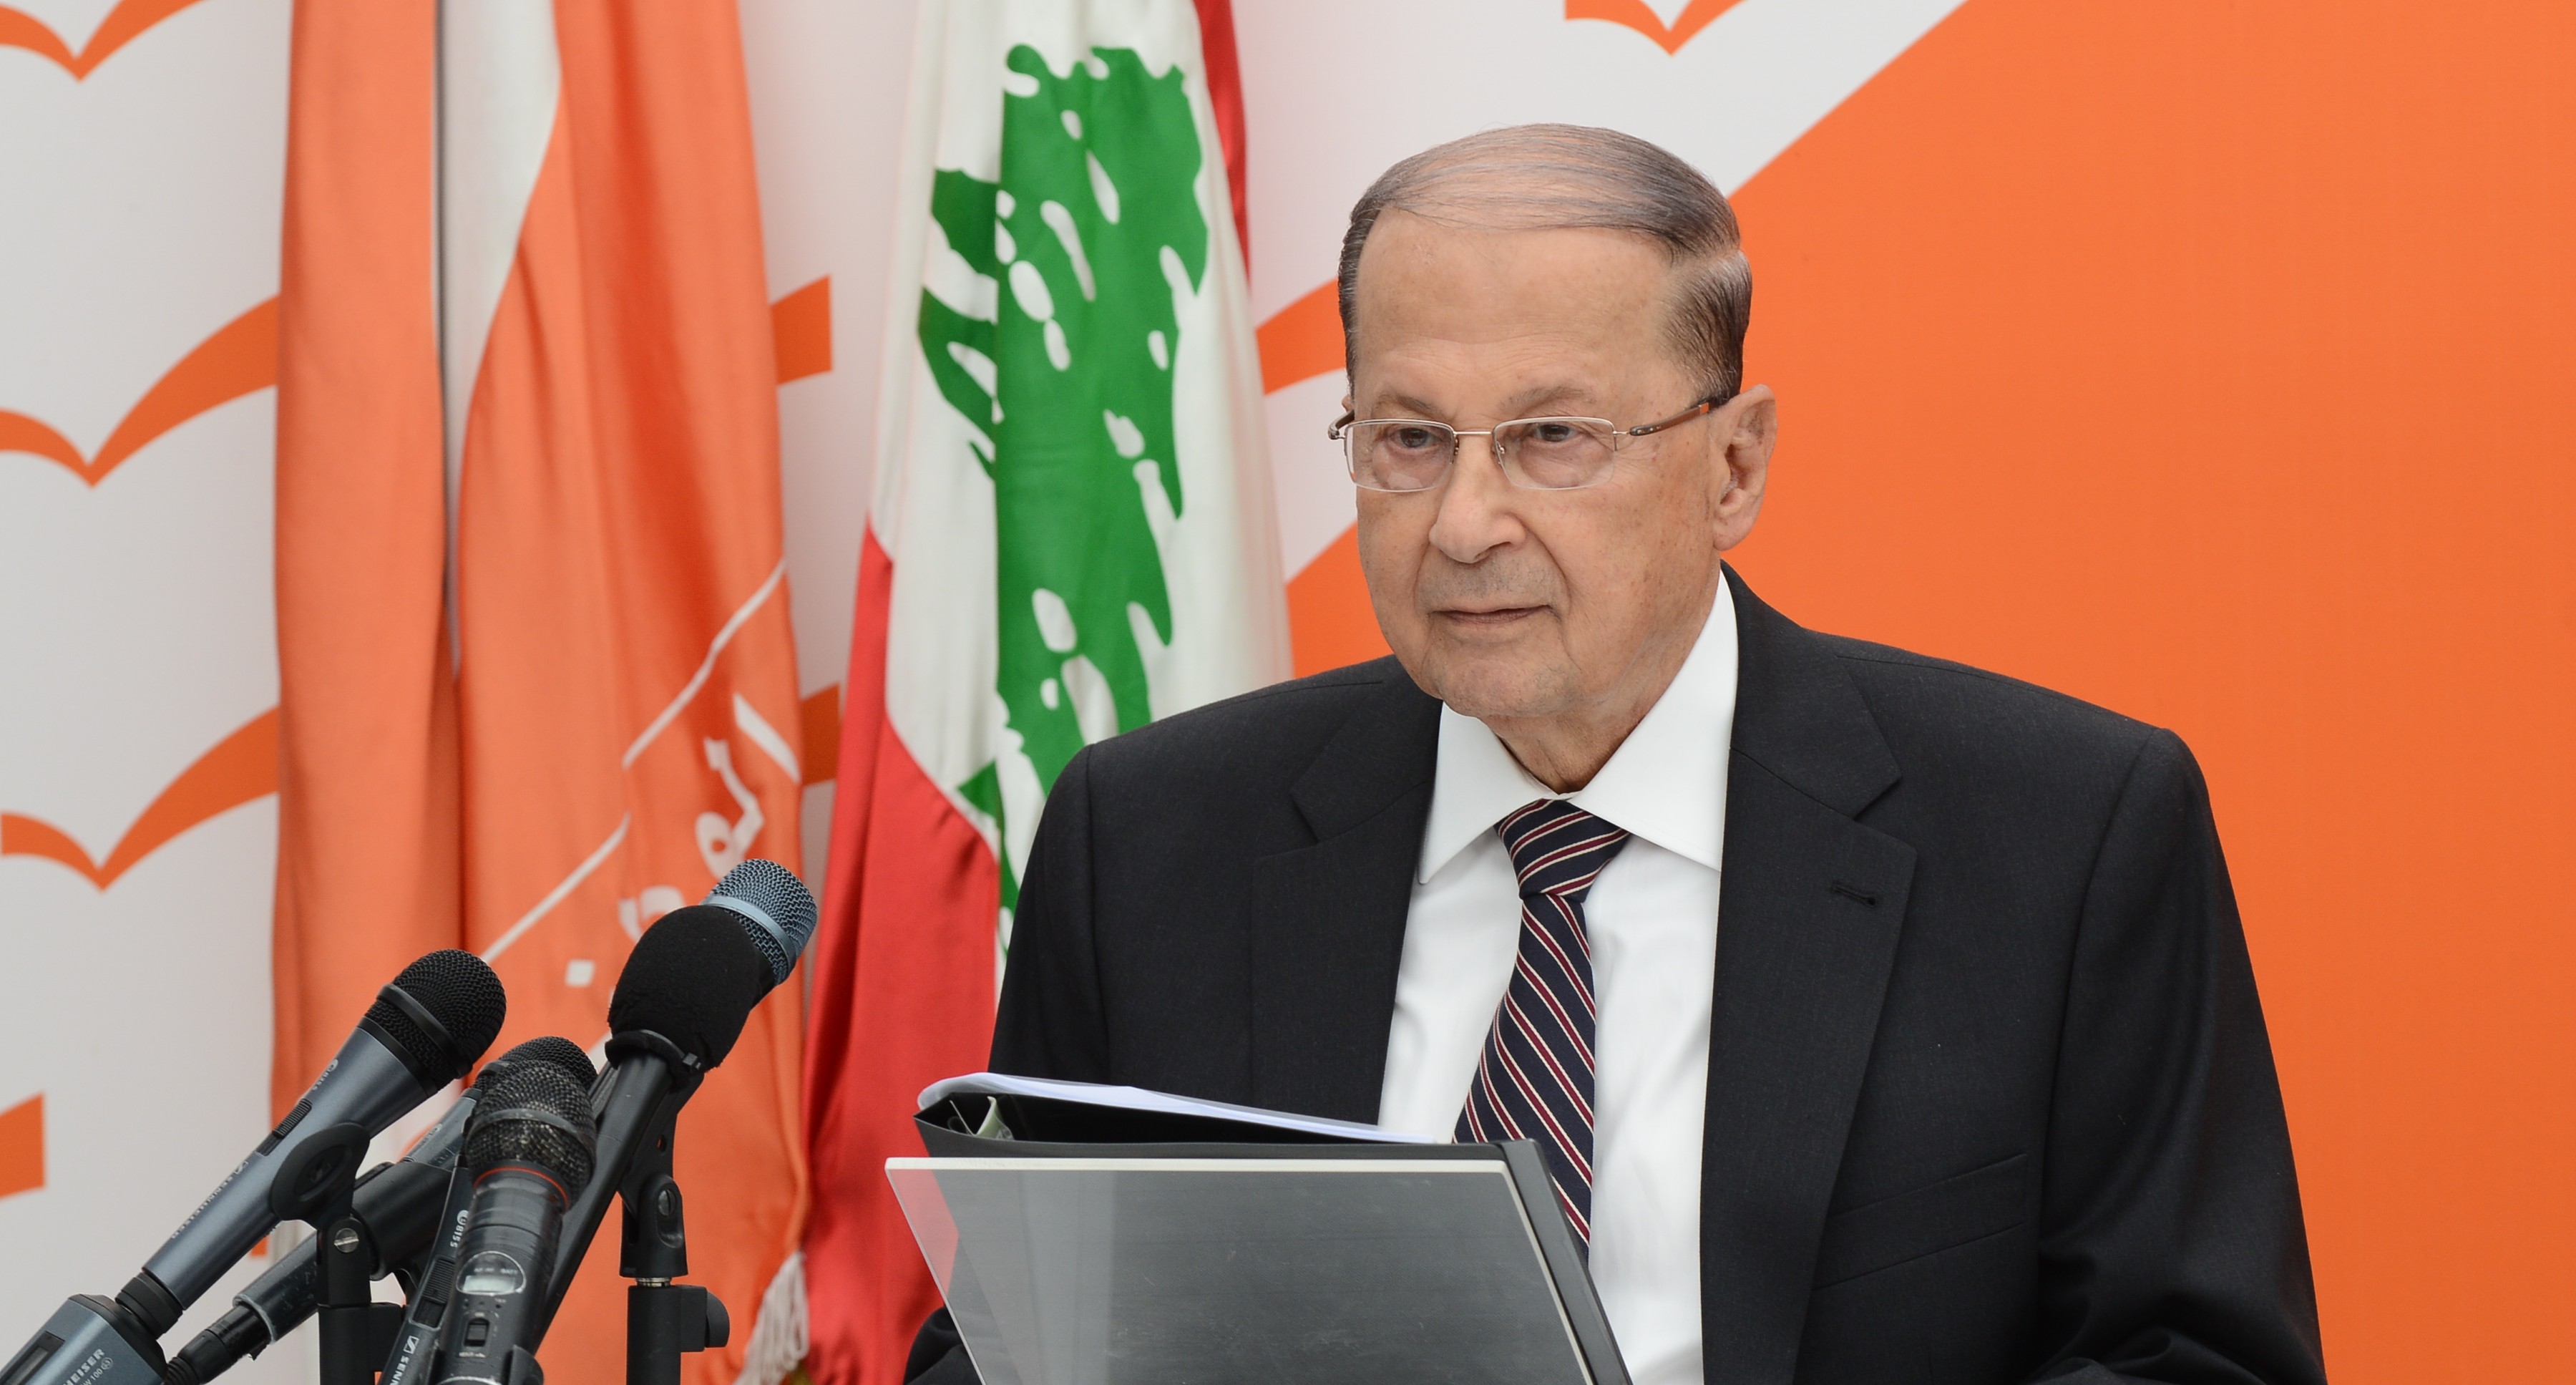 Zarif meets President Aoun